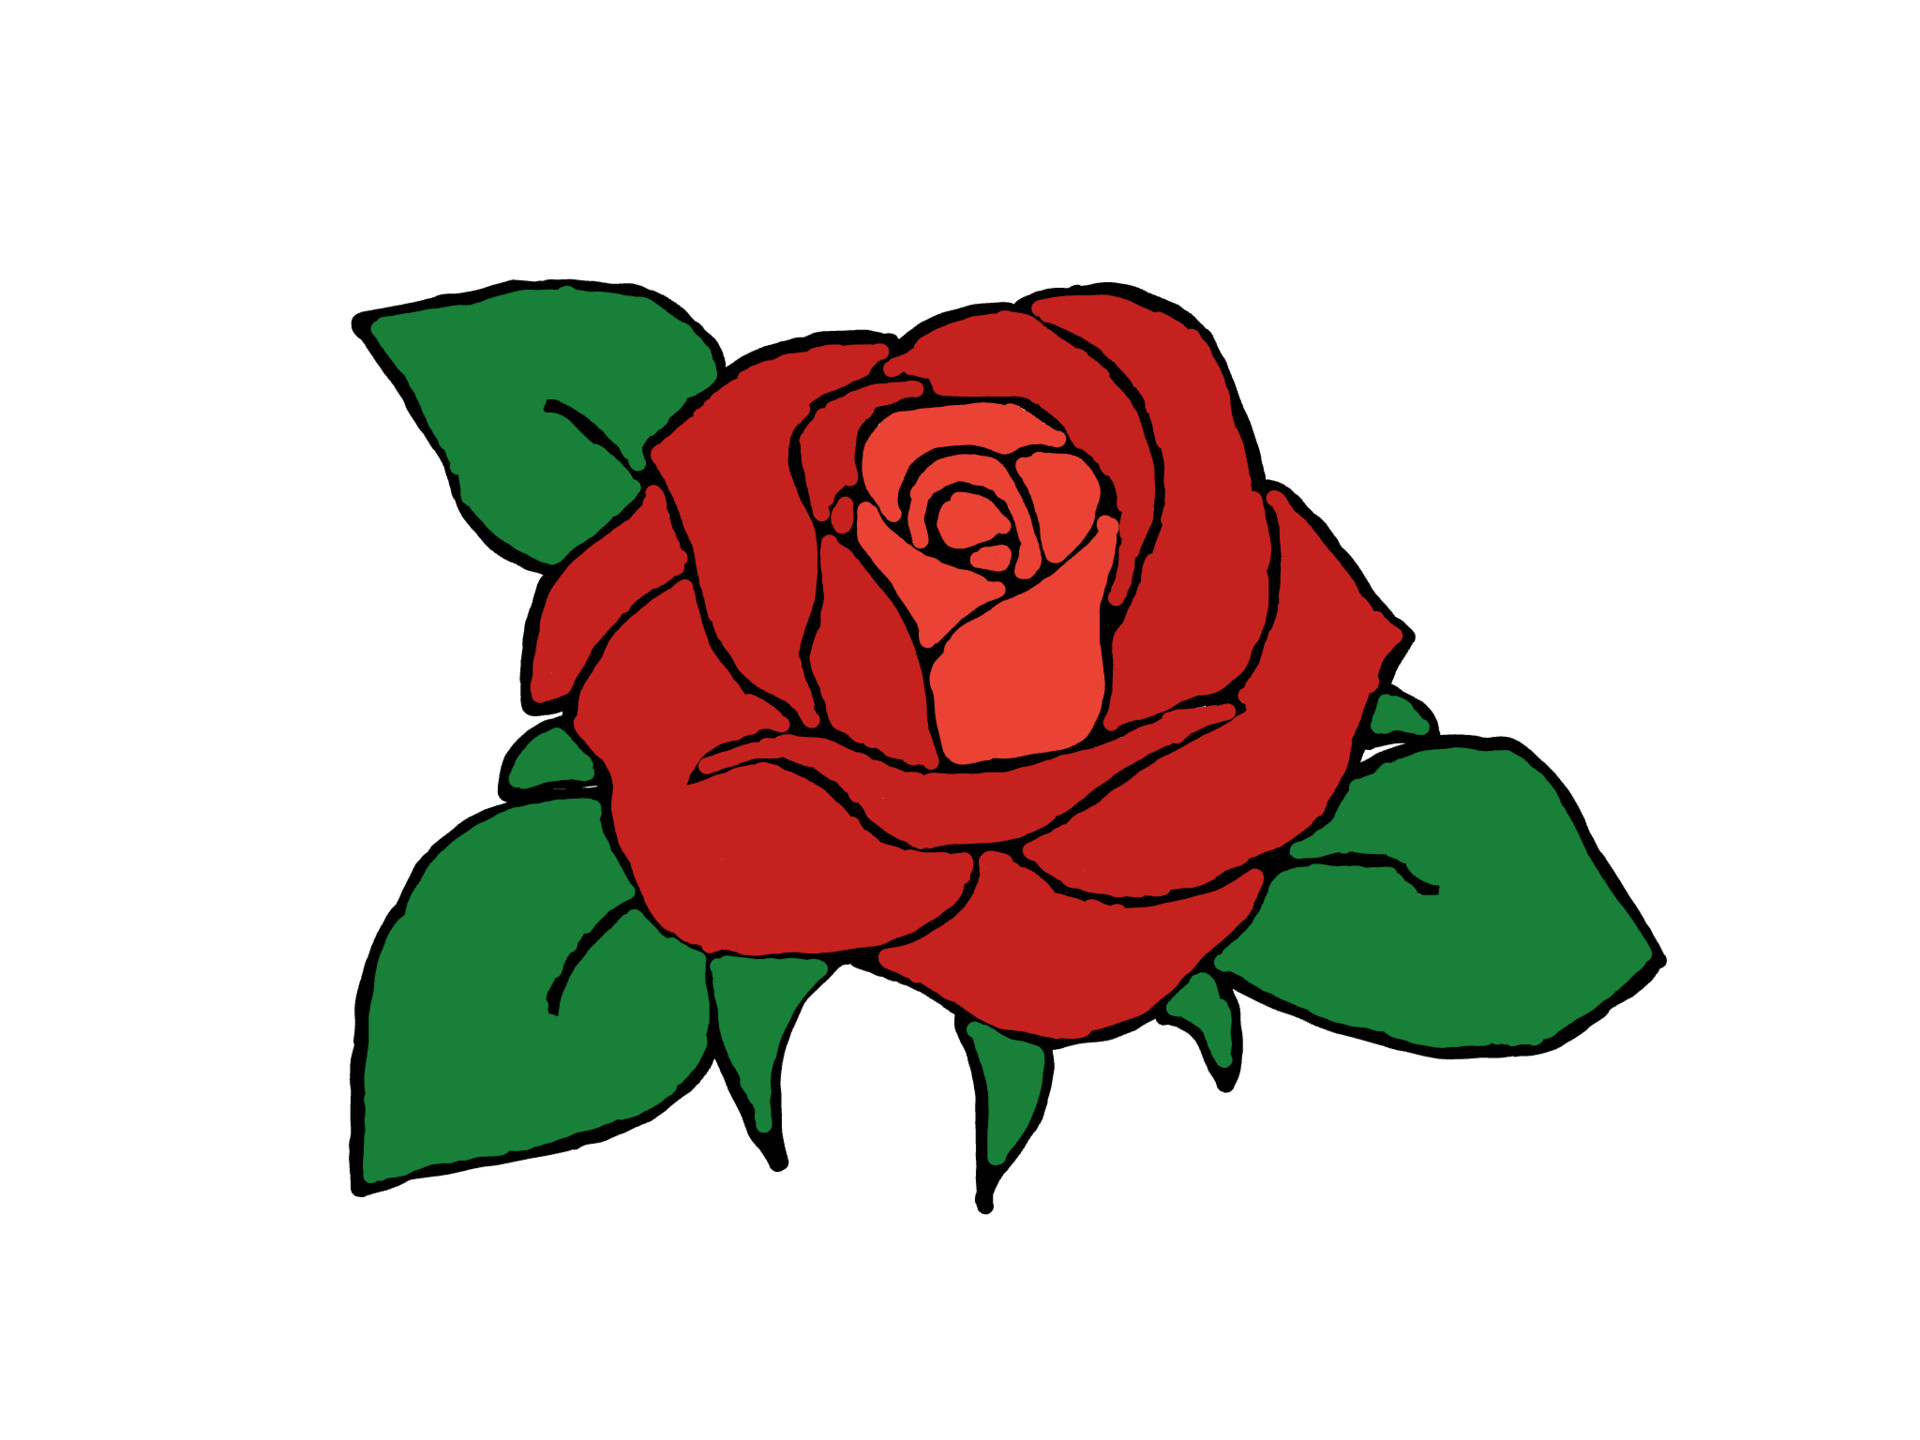 ArtStation - I mixed the rose up